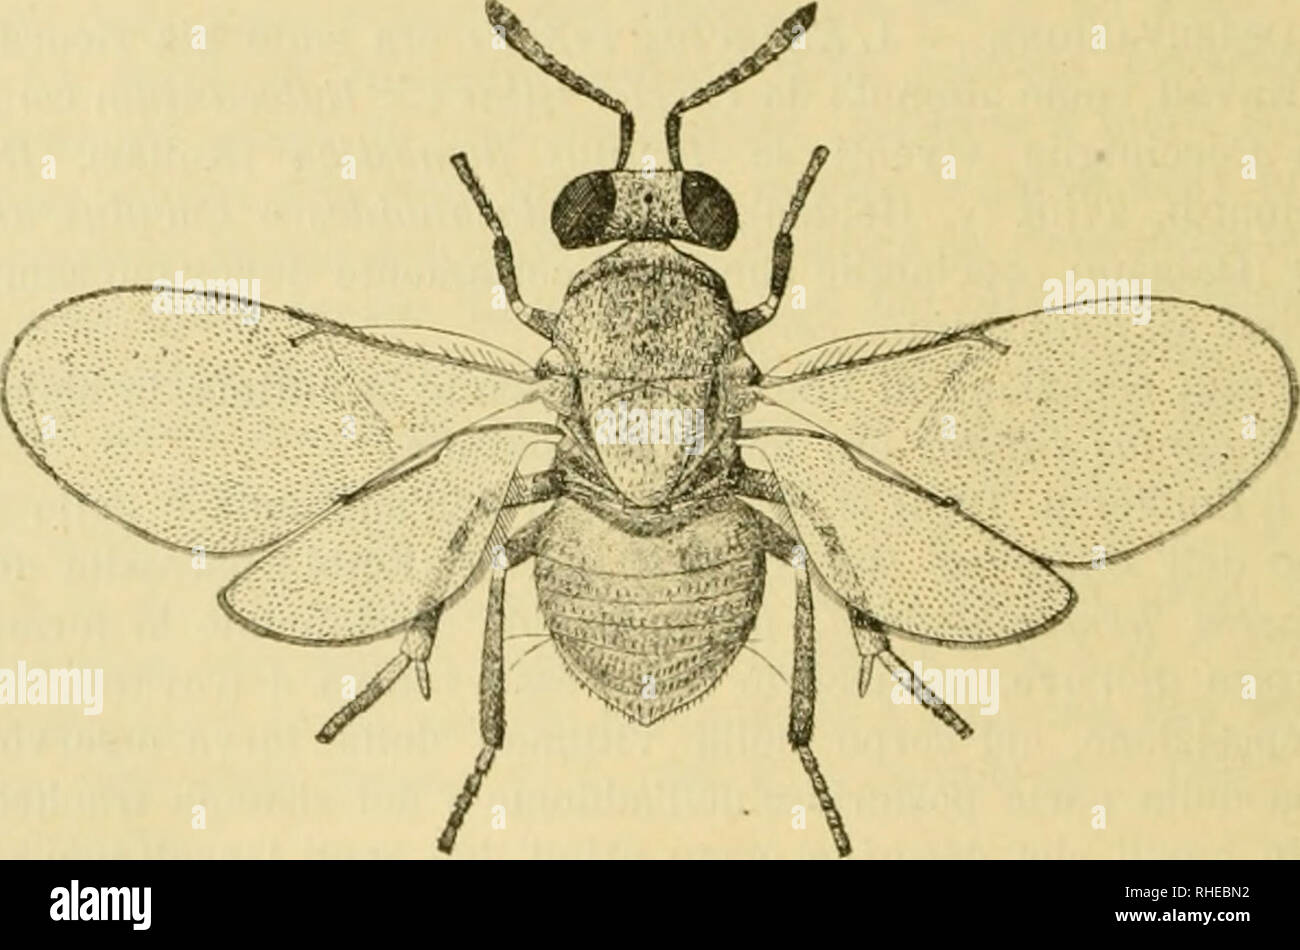 . Bollettino del Laboratorio di zoologia generale e agraria della R. Scuola superiore d'agricoltura in Portici. Zoology; Zoology, Economic; Entomology. - 164 - Encyrtus serkaiix Dalmaii, Svensk. V(&gt;.t-Akad. llaiidl. XLI (1x21)), p. 363; Nees, Hymen. Iclineuiii. affin. Monogr. II (1834), p. 247; Ratze- burg-, Iclincuni. d. Forstinsct-t. III. (1852), p. 193. Encyrtus machaems ^^â alker, Ent. Ma^. IV (18;J7 p. 4(;(); Idem, Ann. et Mag. nat. Hist. XIV, 1814, p. 185. Microtevyx sericetts Thomson, Ilymeu. Scandin. IV. P. 1. (1875), p. 156. lilaslolhrix sericea Mayr, Verh. zool. bot. Ges. Wien XX Stock Photo